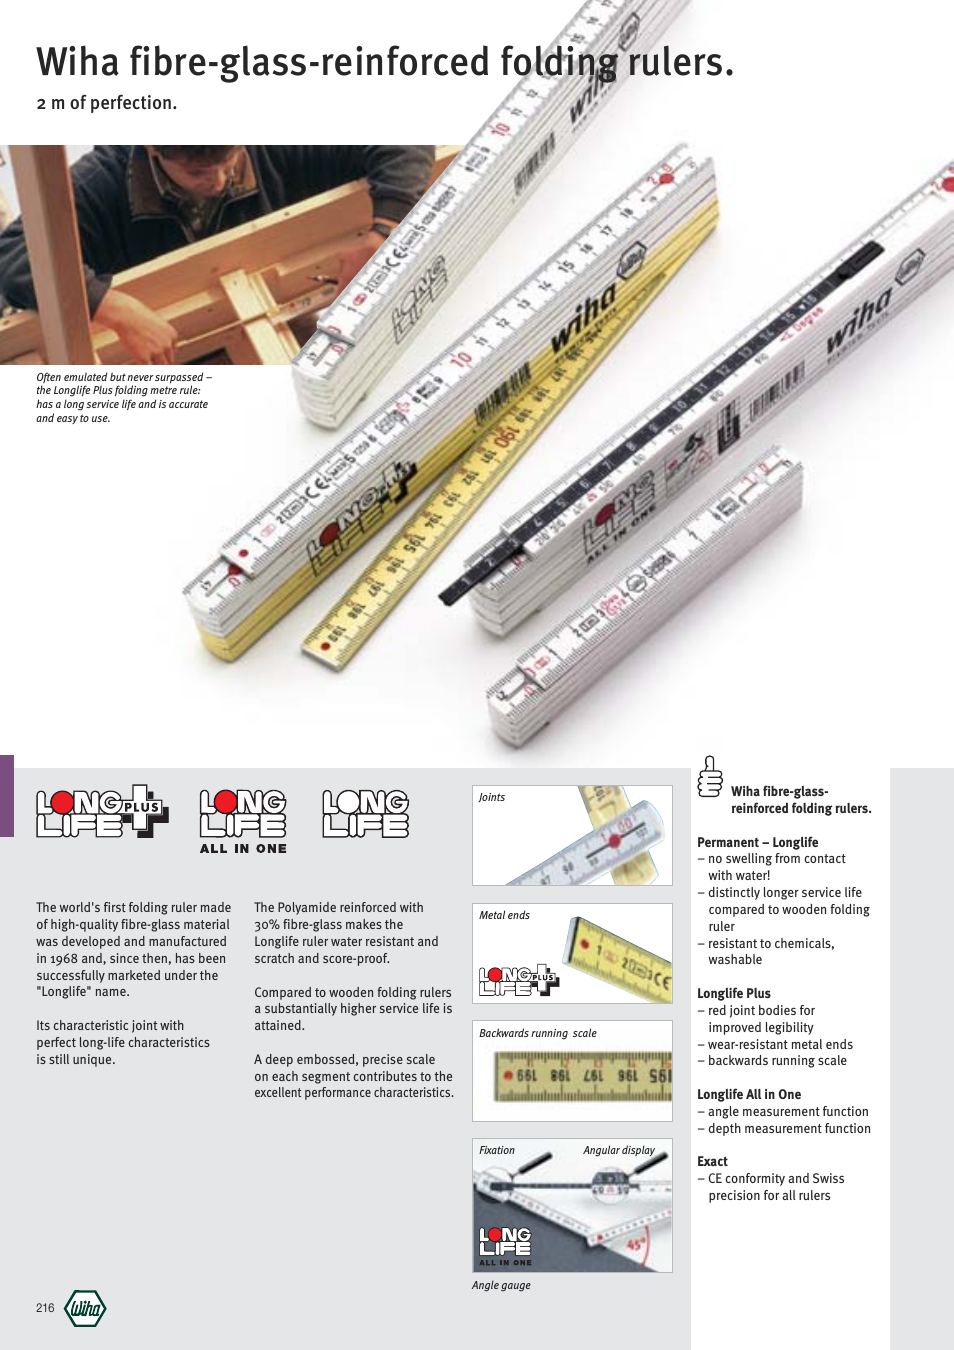 Fibre-glass-reinforced folding rulers